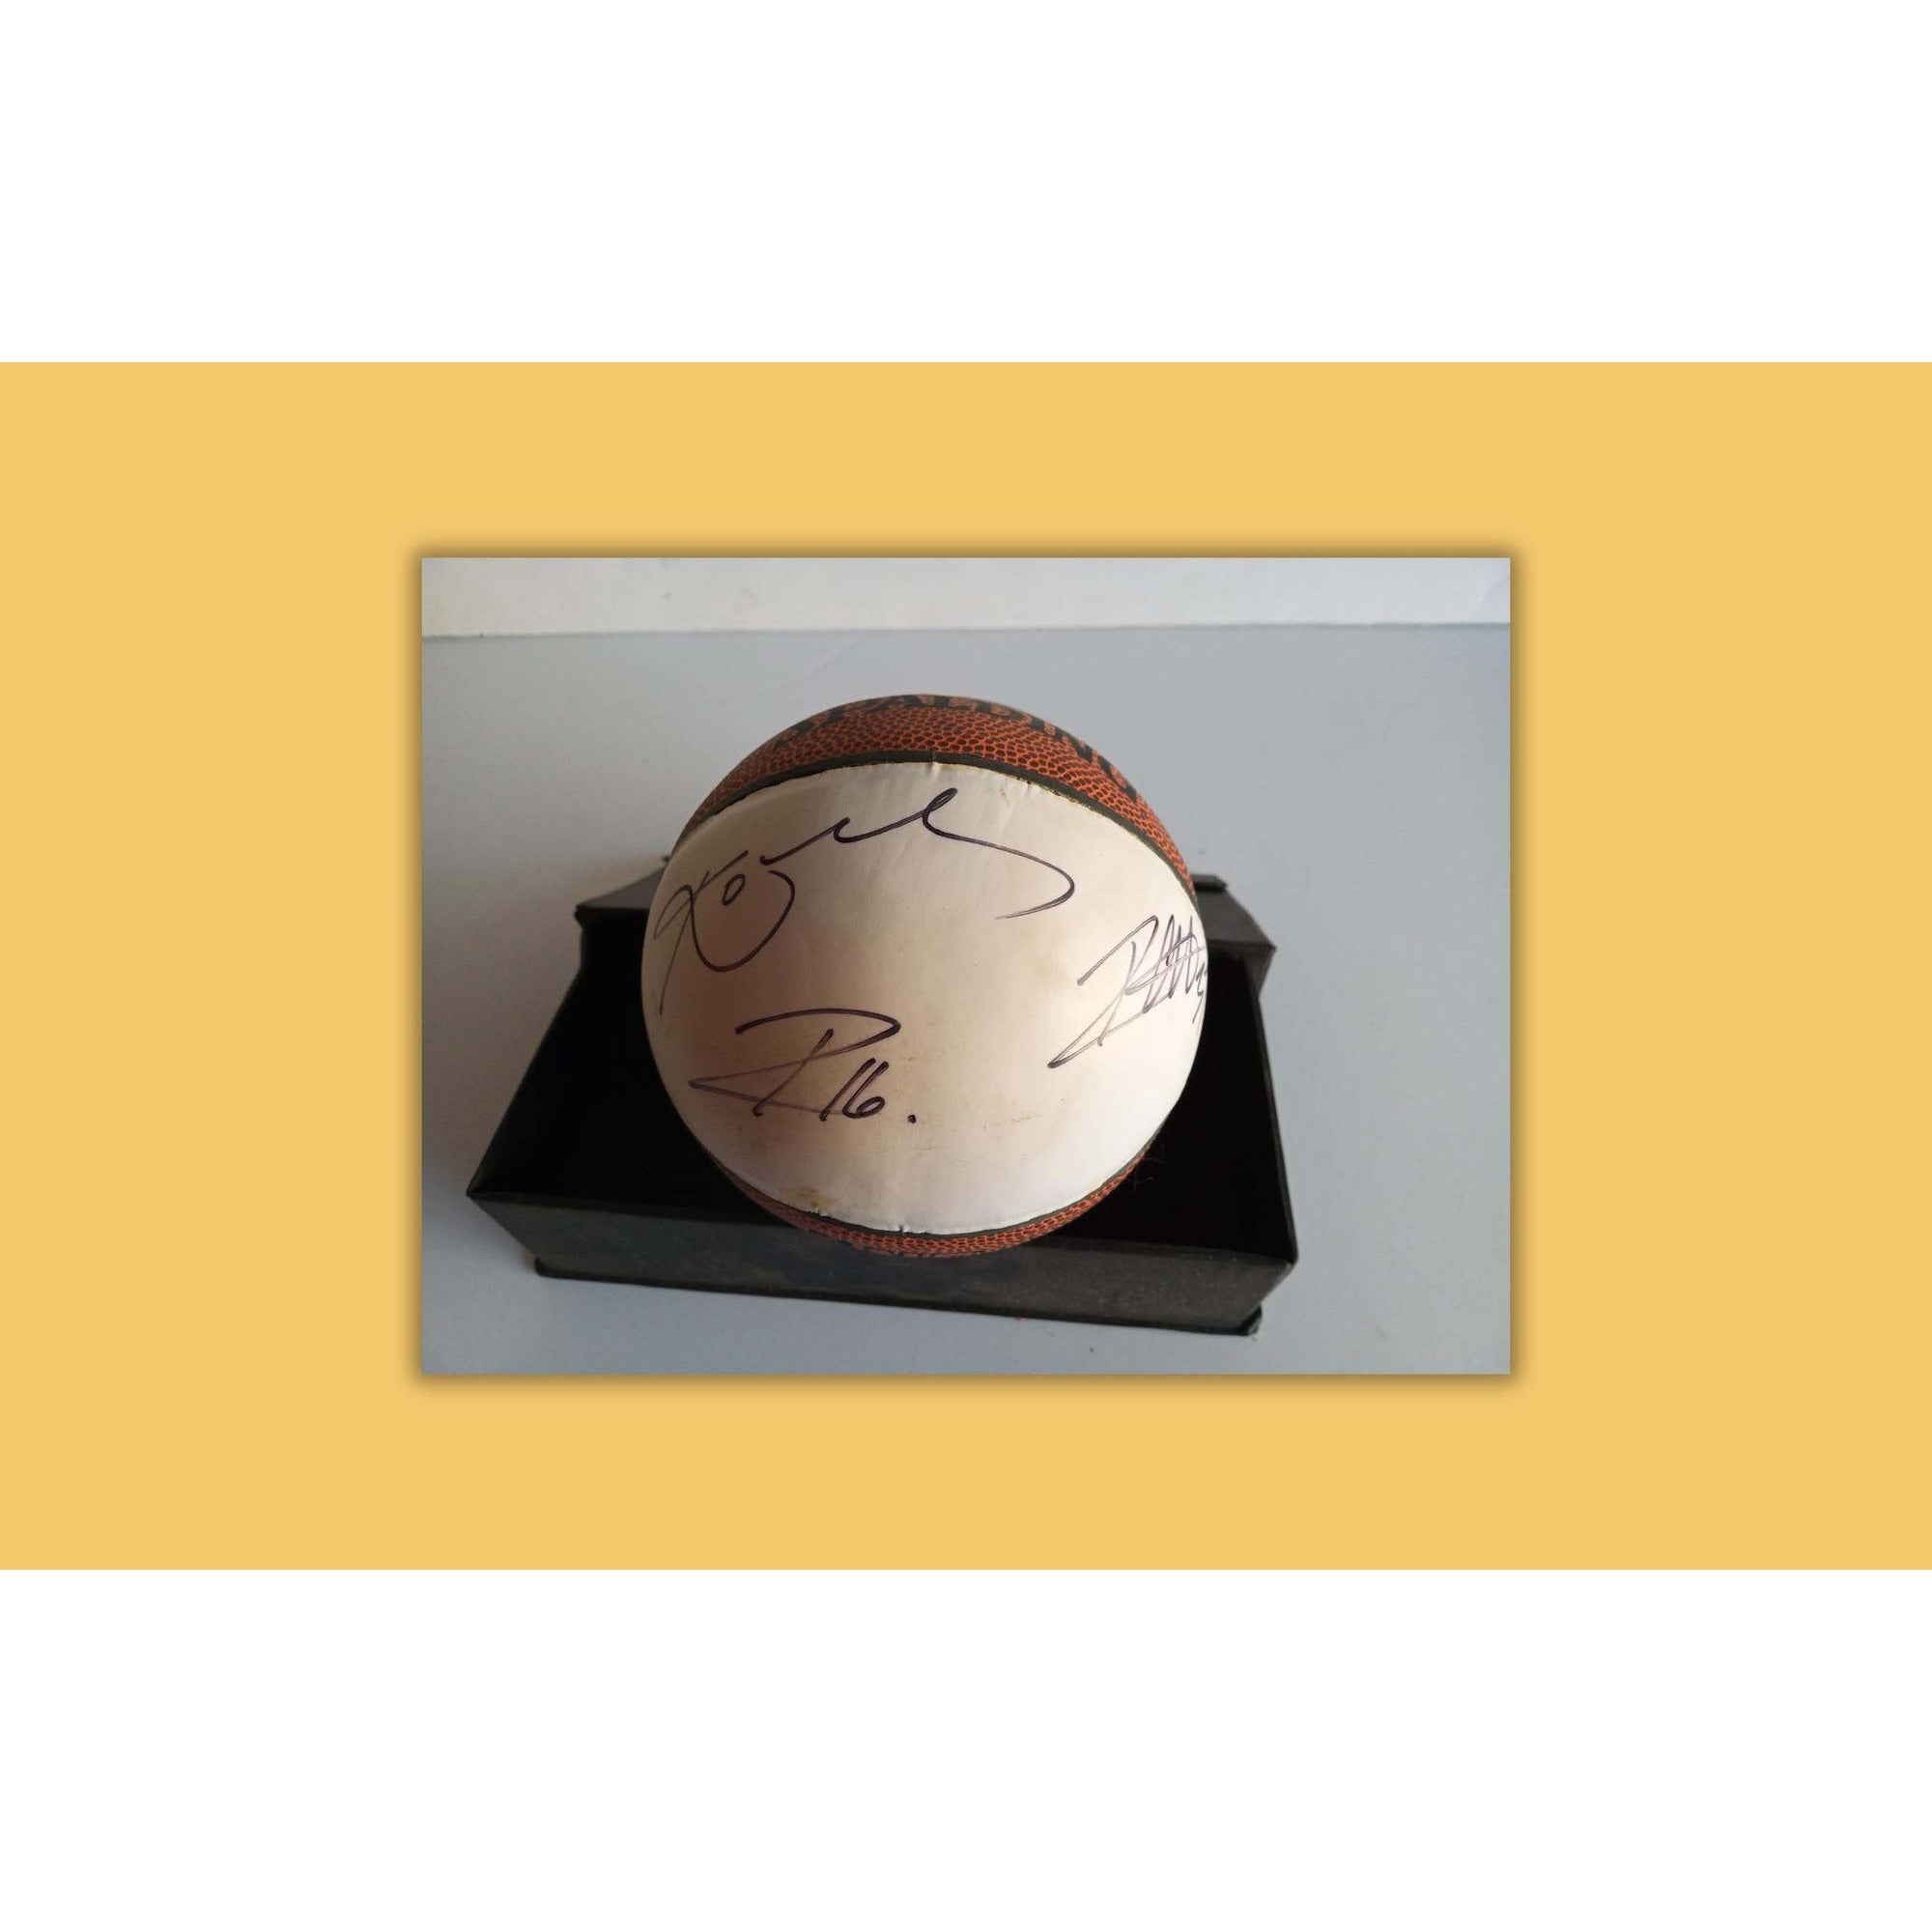 Kobe Bryant Ron Artest Pau Gasol Spalding mini basketball signed with proof